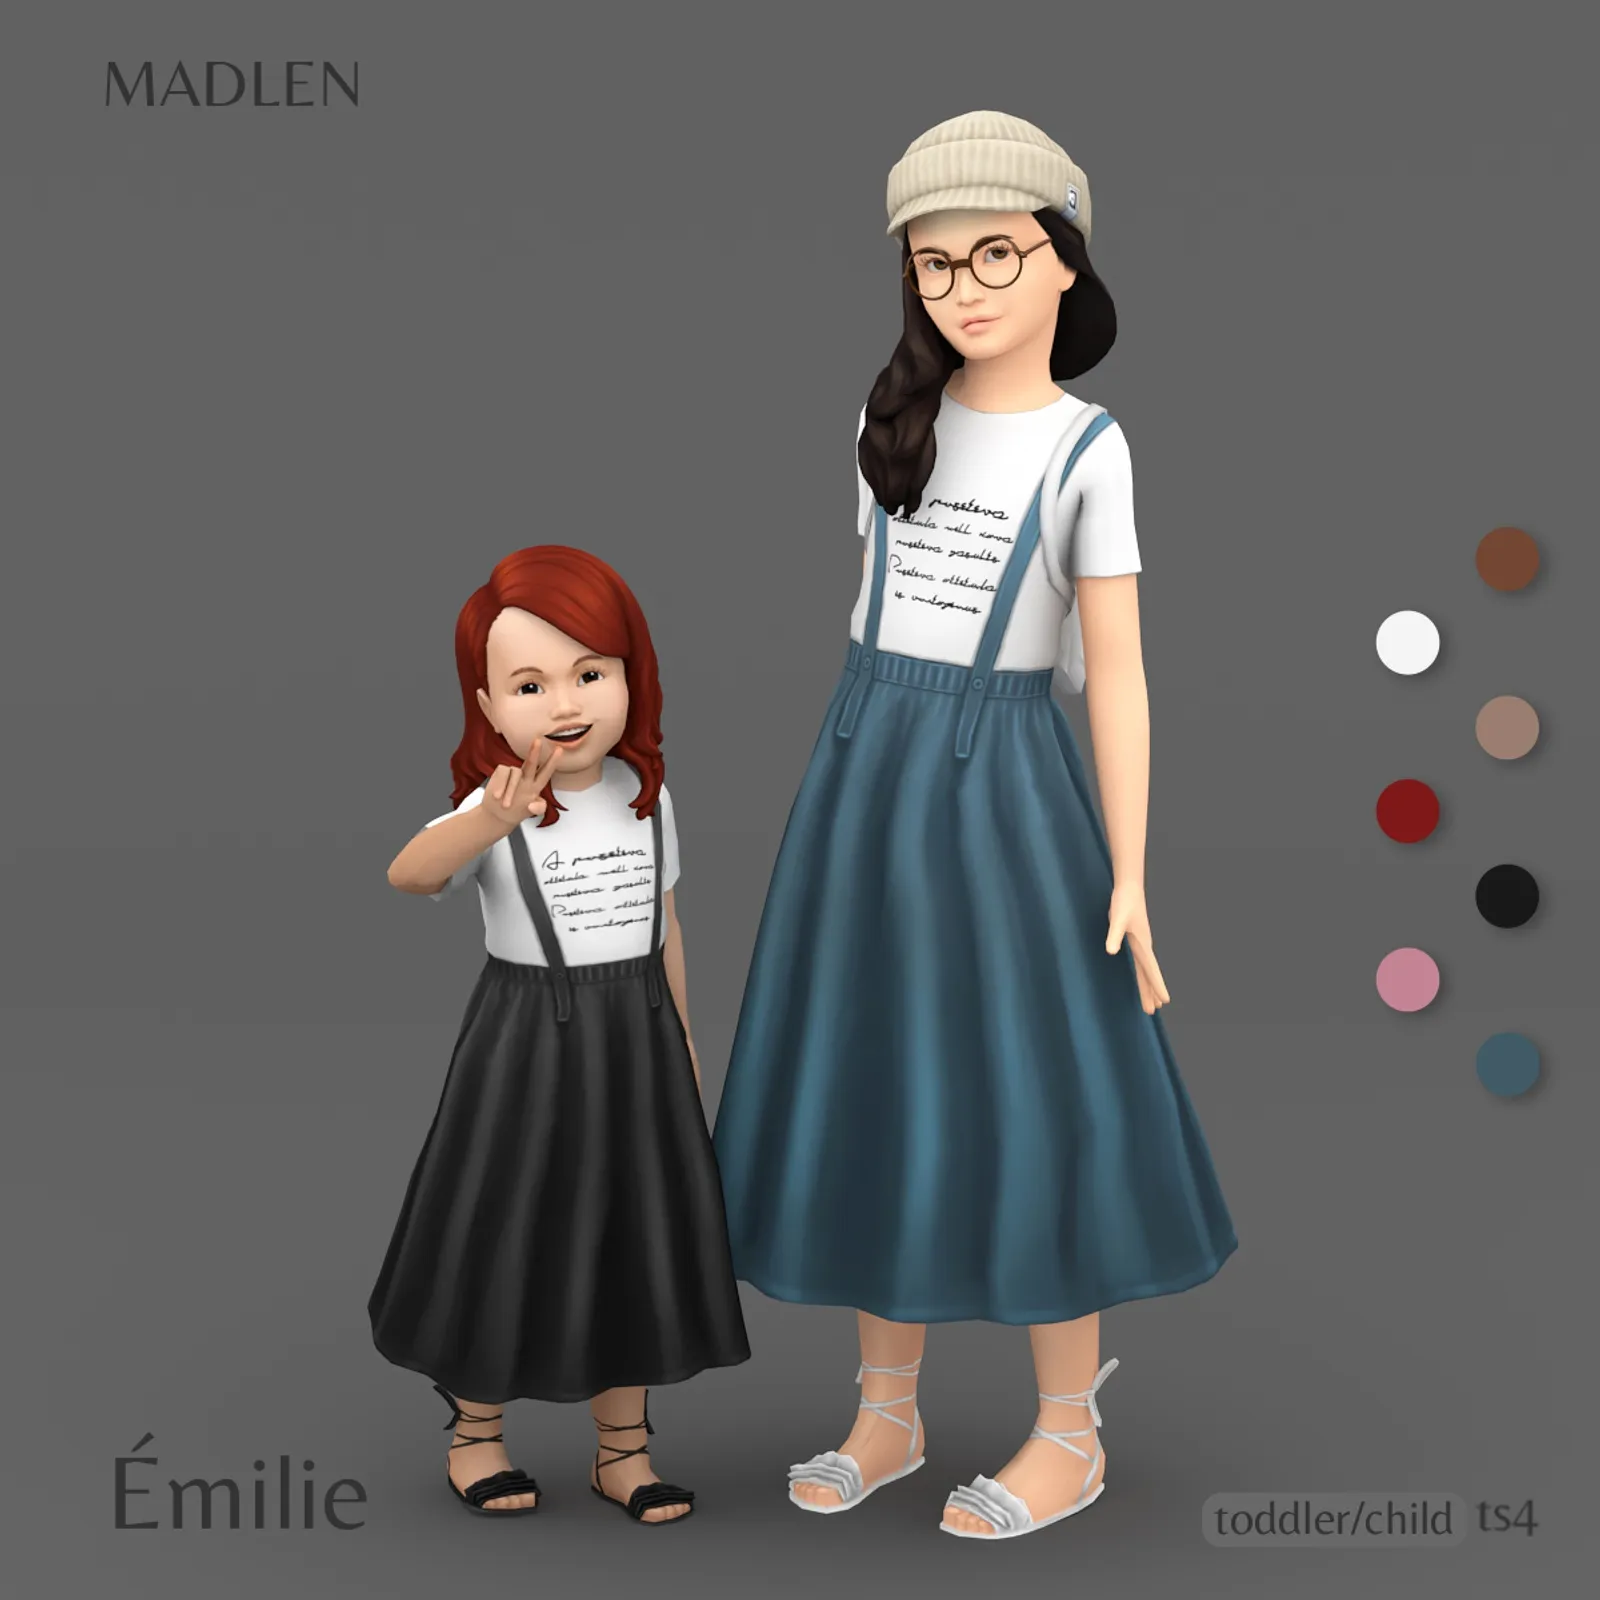 Emilie Outfit